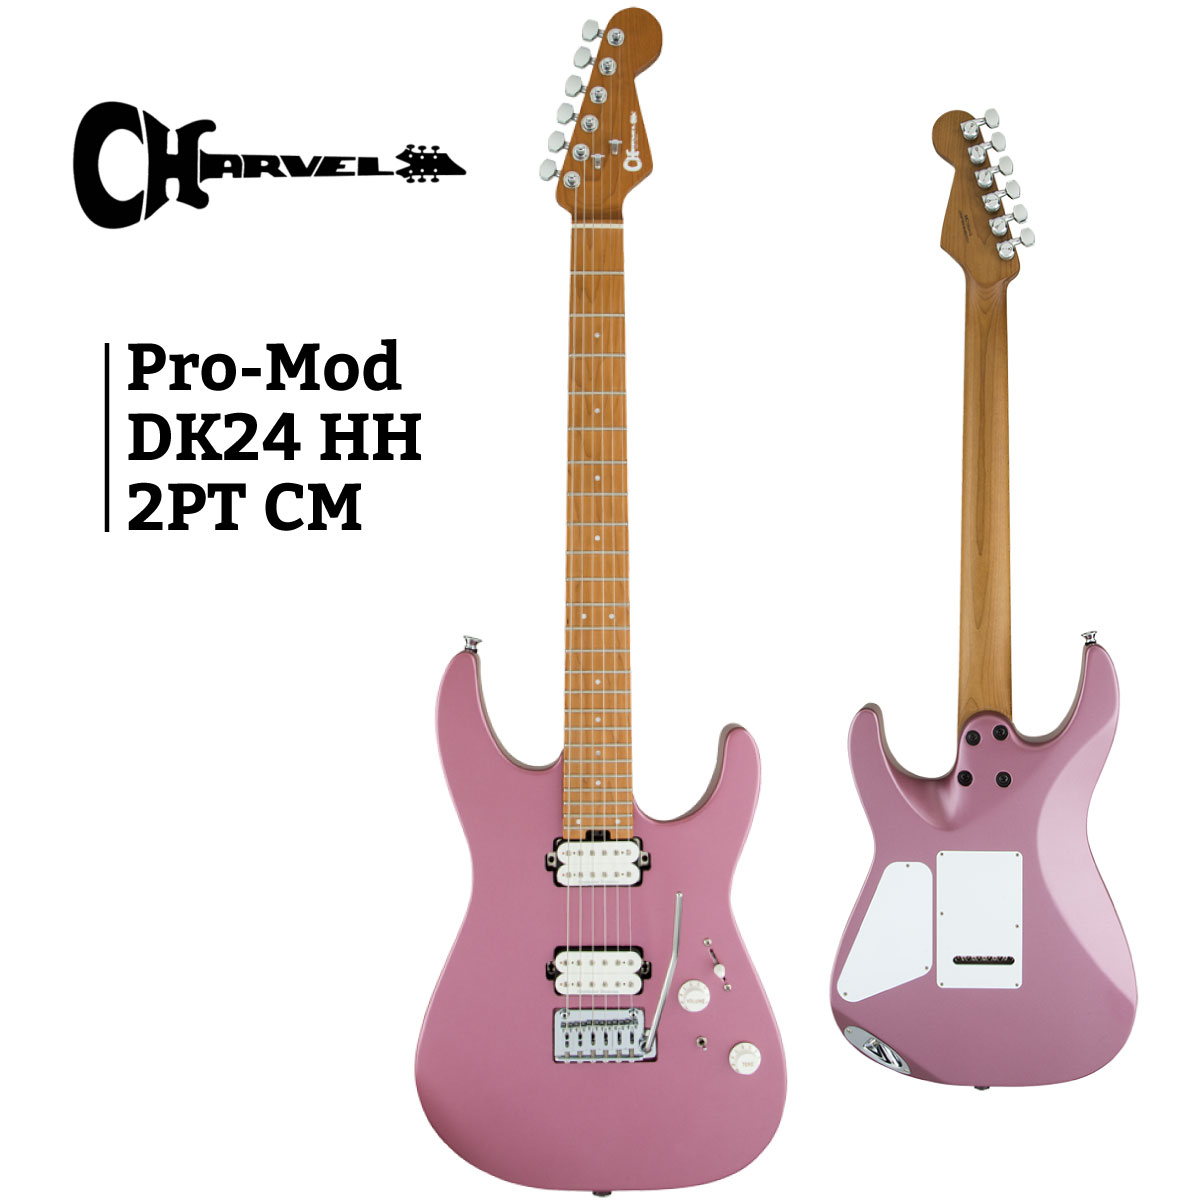 Charvel Pro-Mod Dinky DK24 HH 2PT CM -Satin Burgundy シャーベル エレキギター Guitar 超お買い得 新品 Stratocaster 最大93%OFFクーポン ストラトキャスタータイプ Electric Mist-